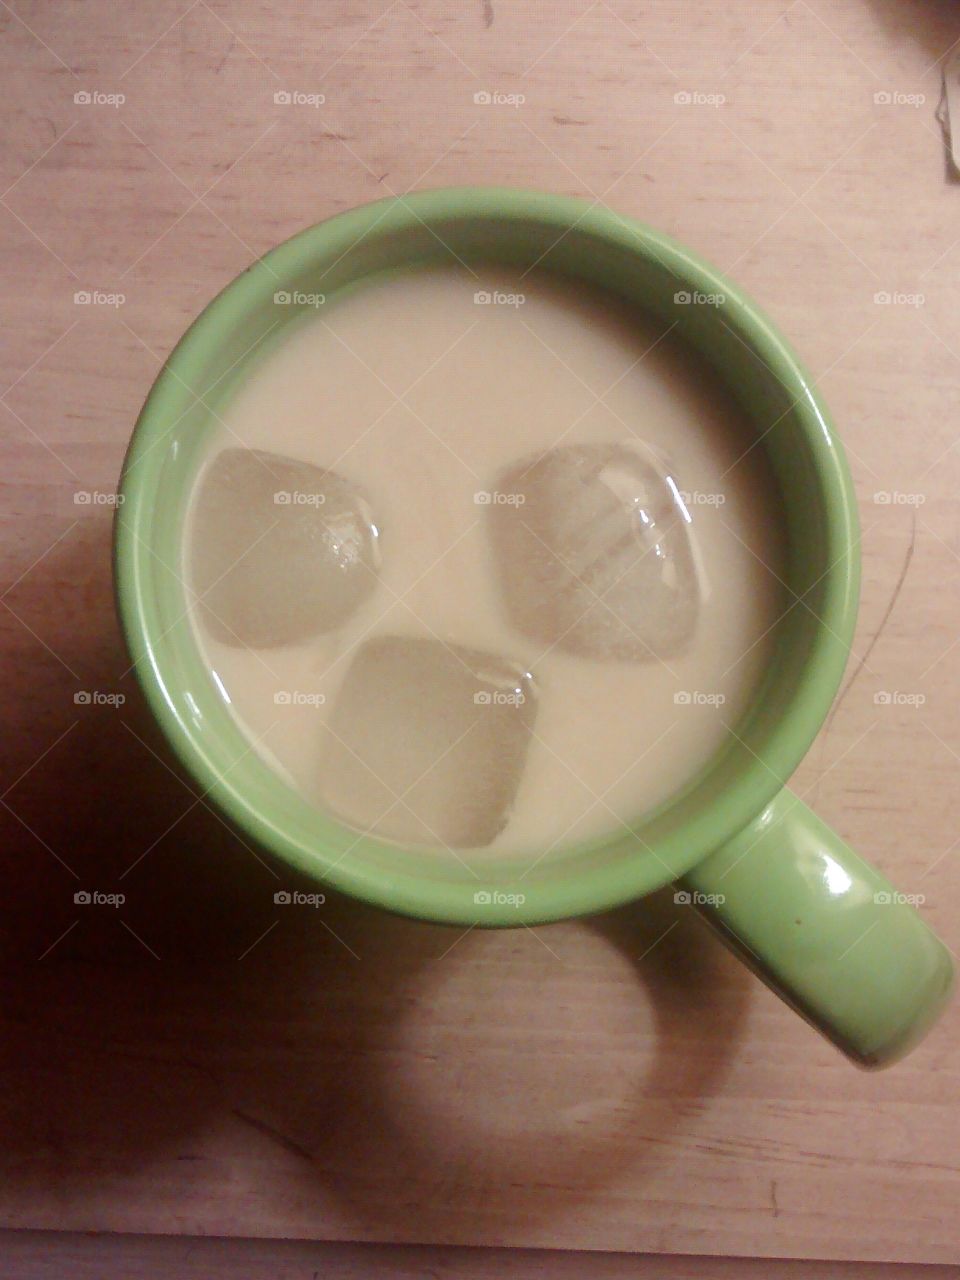 Iced Coffee in a Green Mug